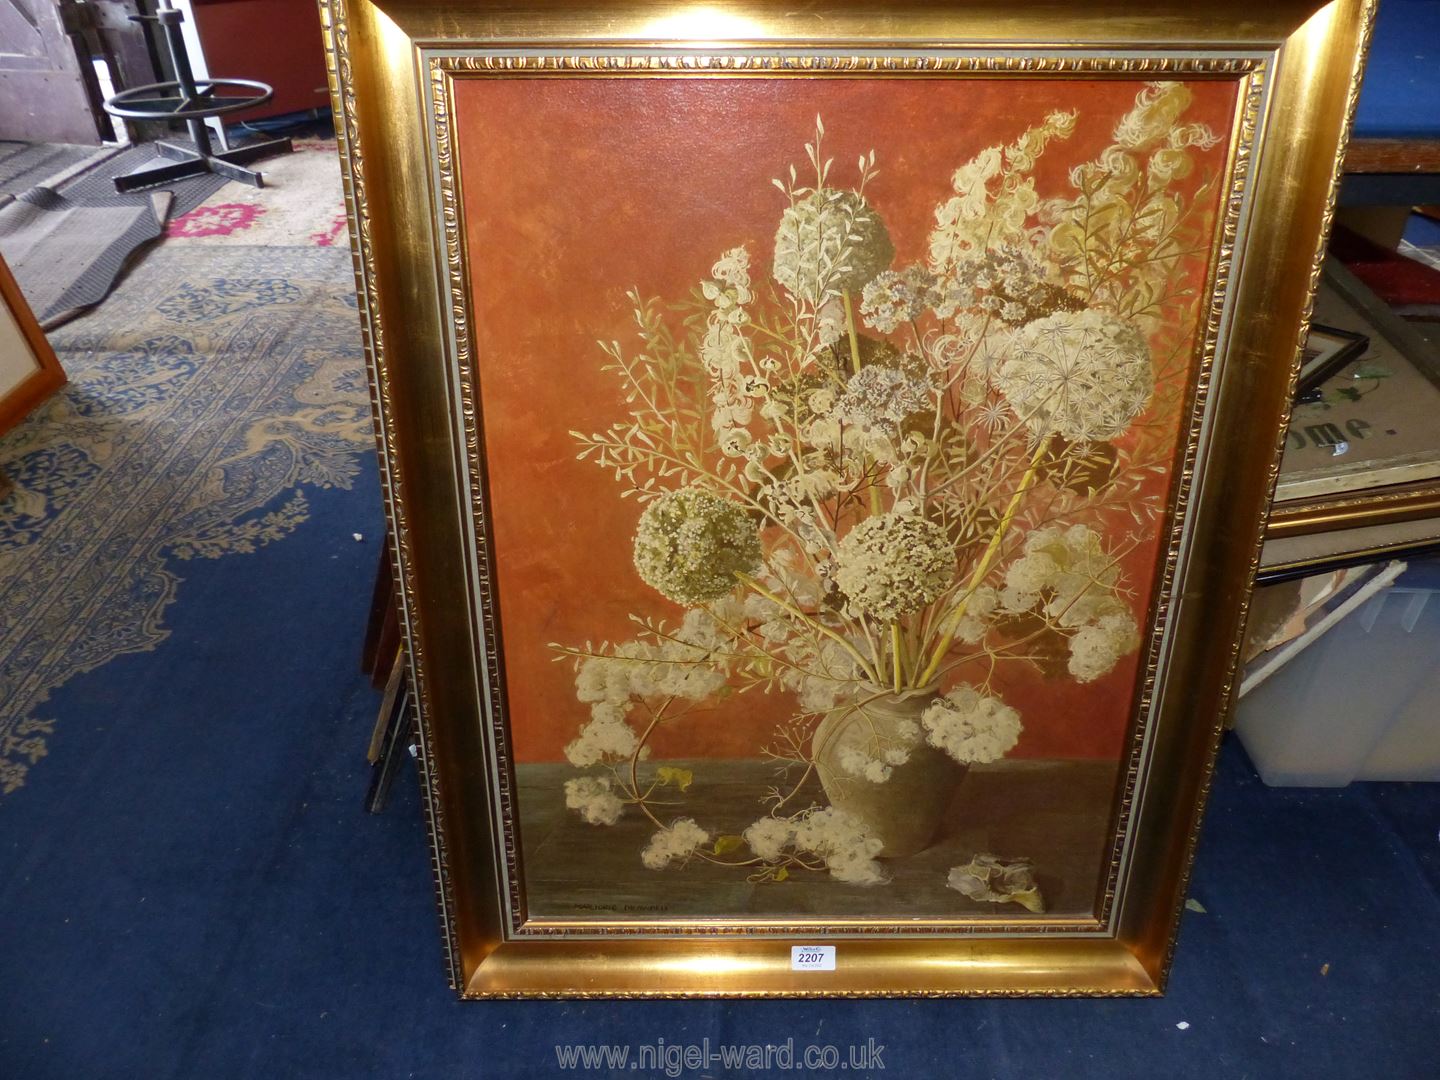 A gilt framed print on board depicting a vase of flowers, signed lower left 'Marjorie Drawbell'.